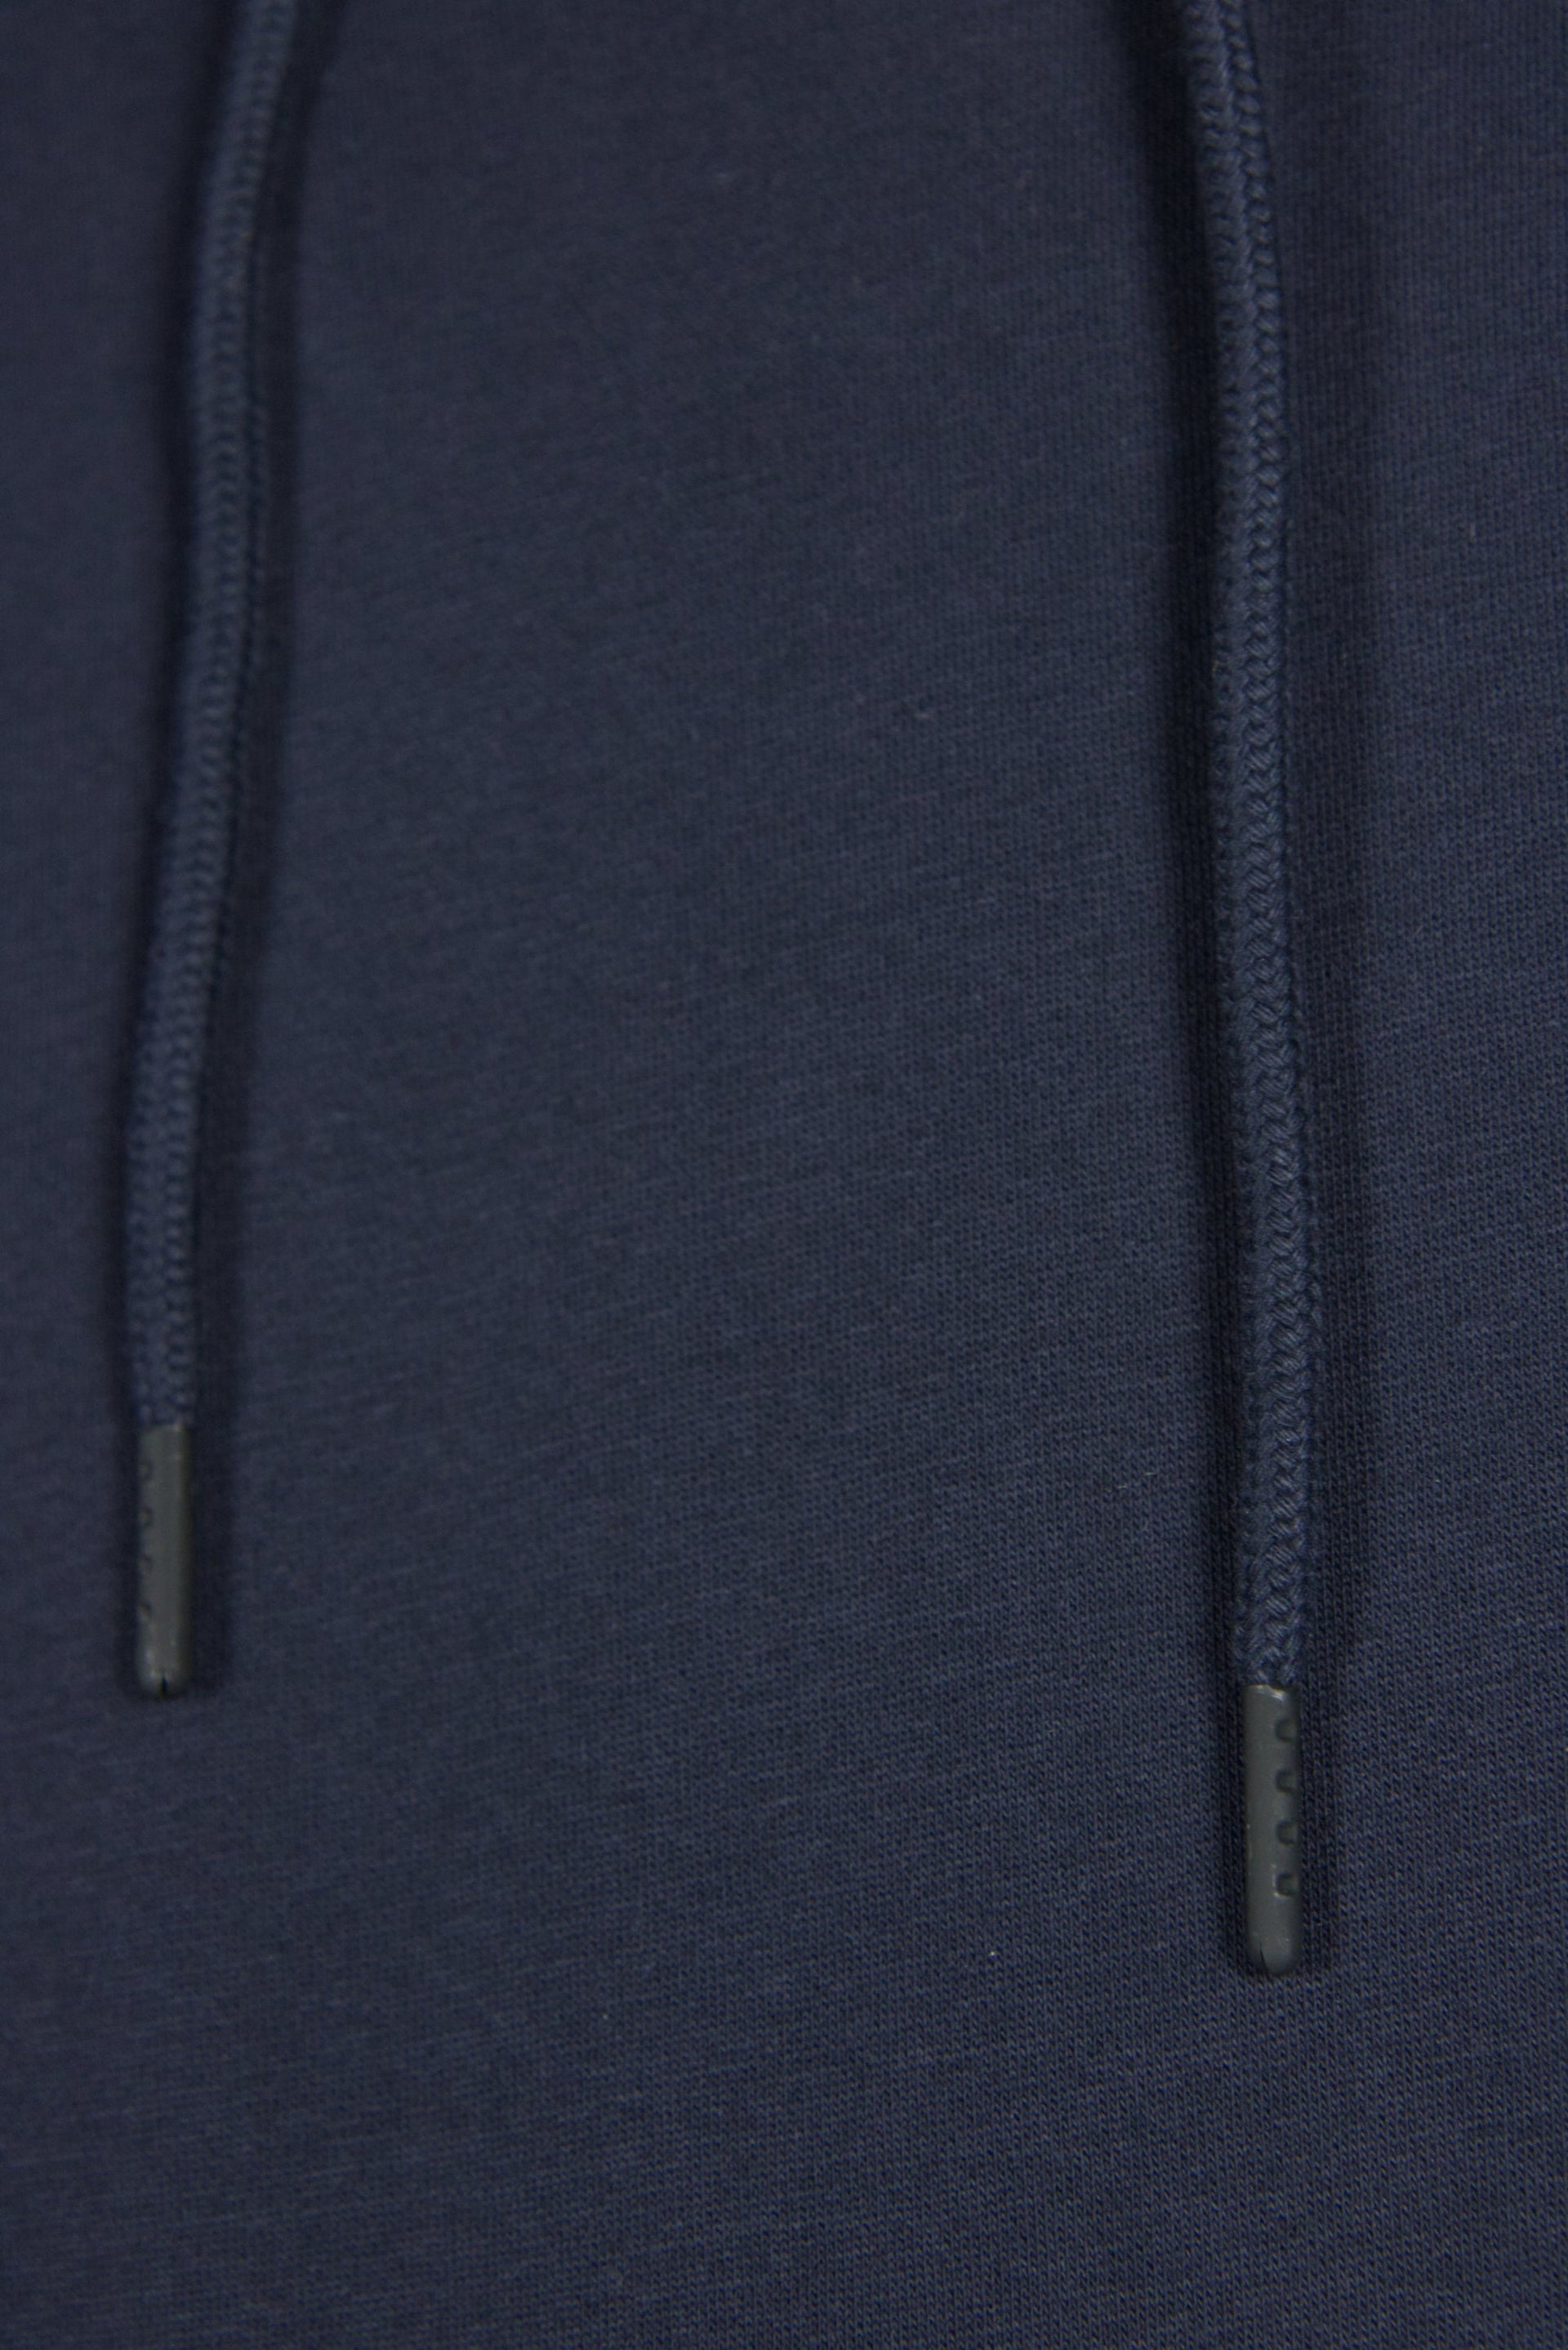 The drawstrings of the navy blue Jordan Craig basic tech fleece pullover hoodie.